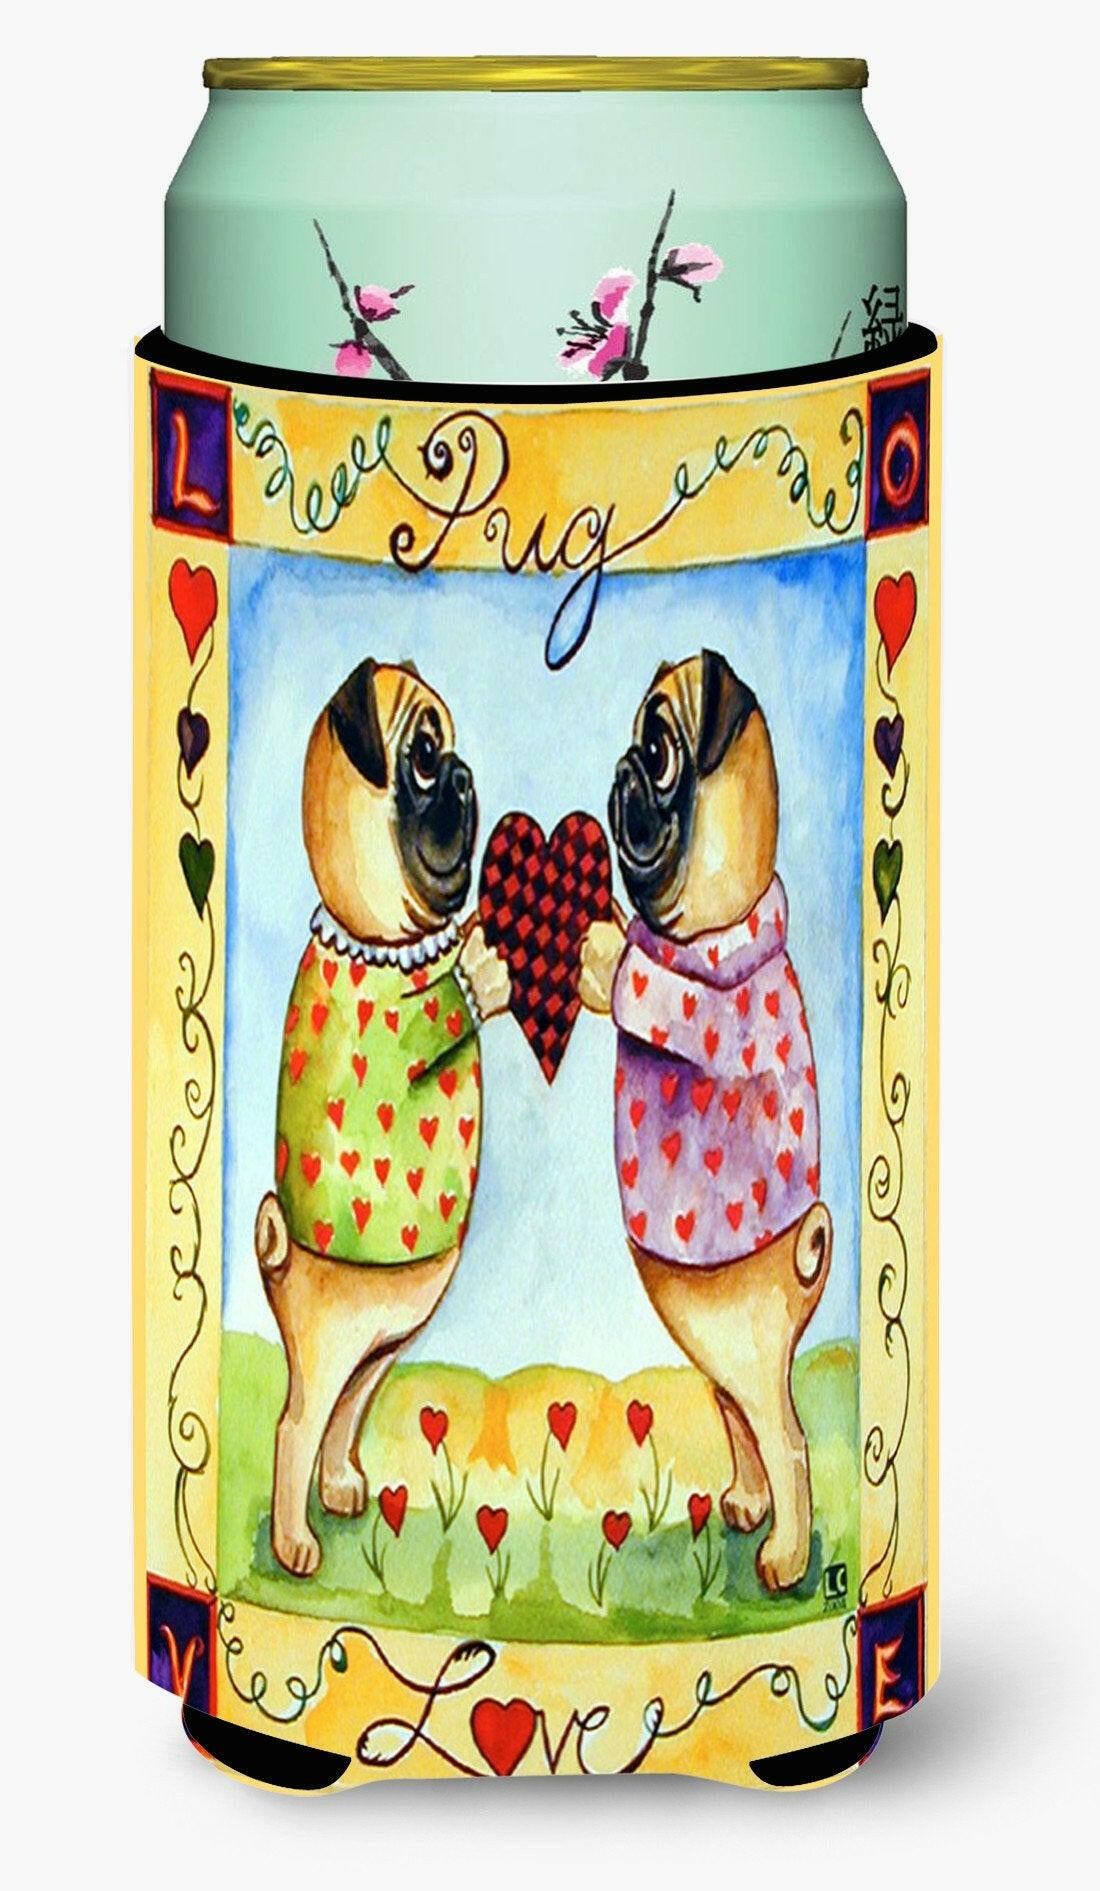 Pug LOVE Pug Love Valentine's Day  Tall Boy Beverage Insulator Beverage Insulator Hugger by Caroline's Treasures